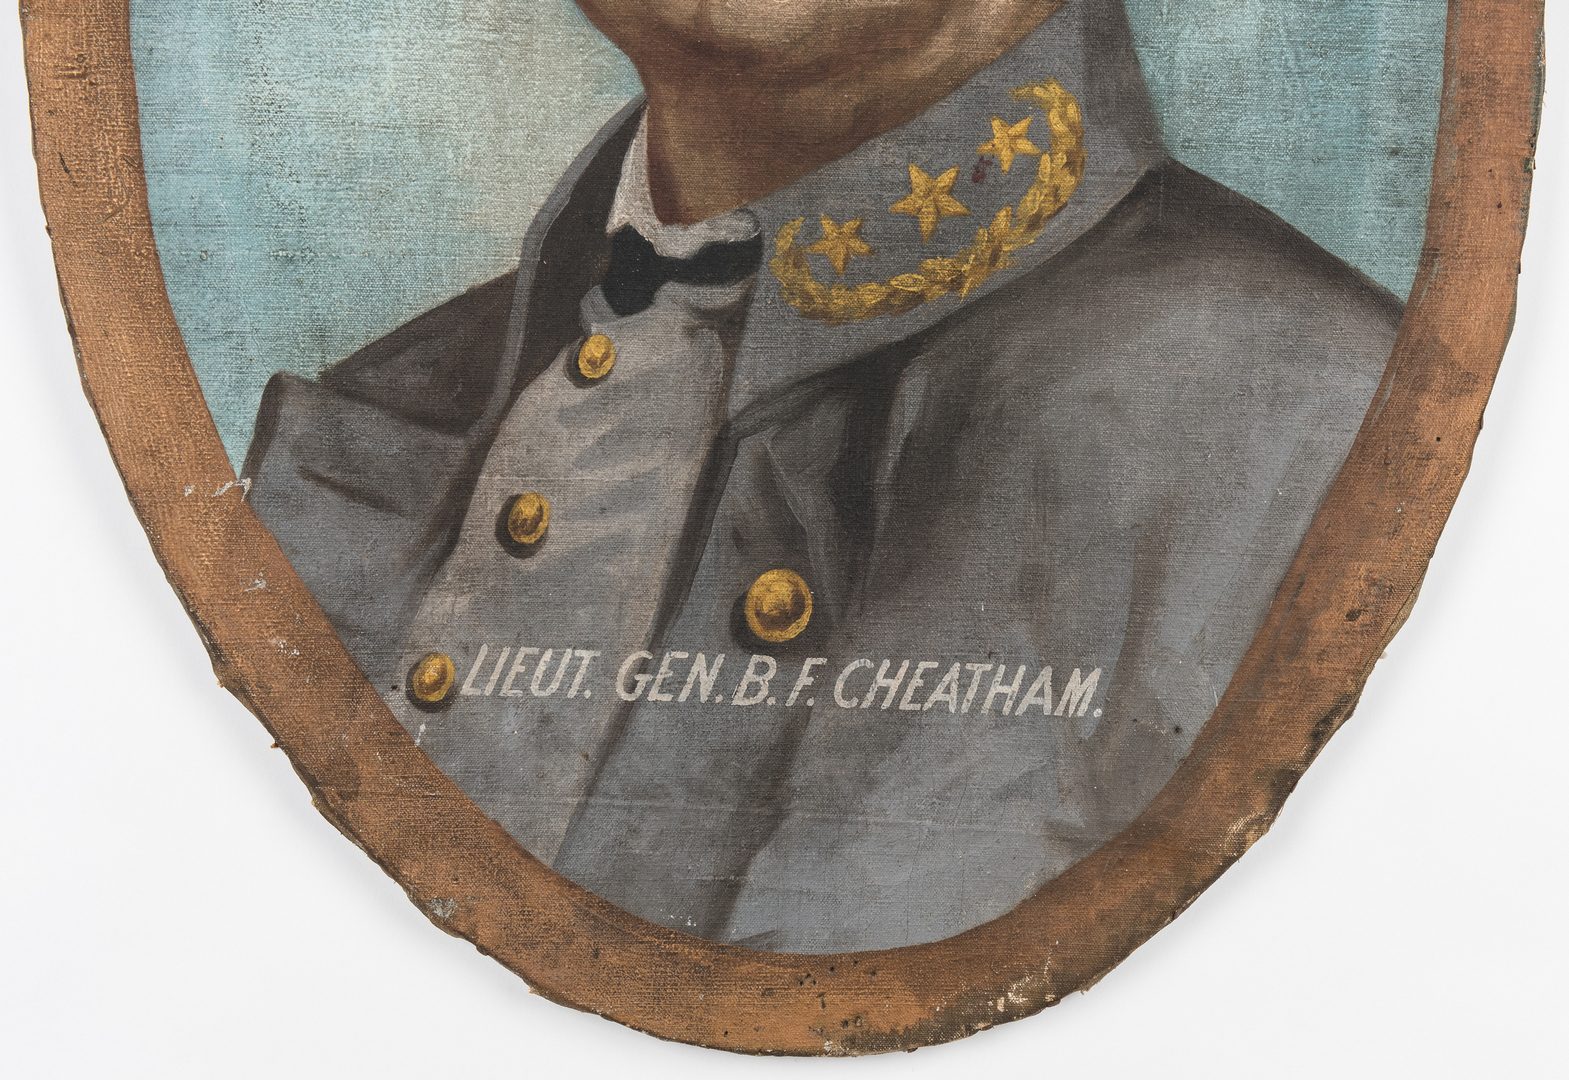 Lot 346: Lawrence Thompson Dickinson O/C, General B. F. Cheatham